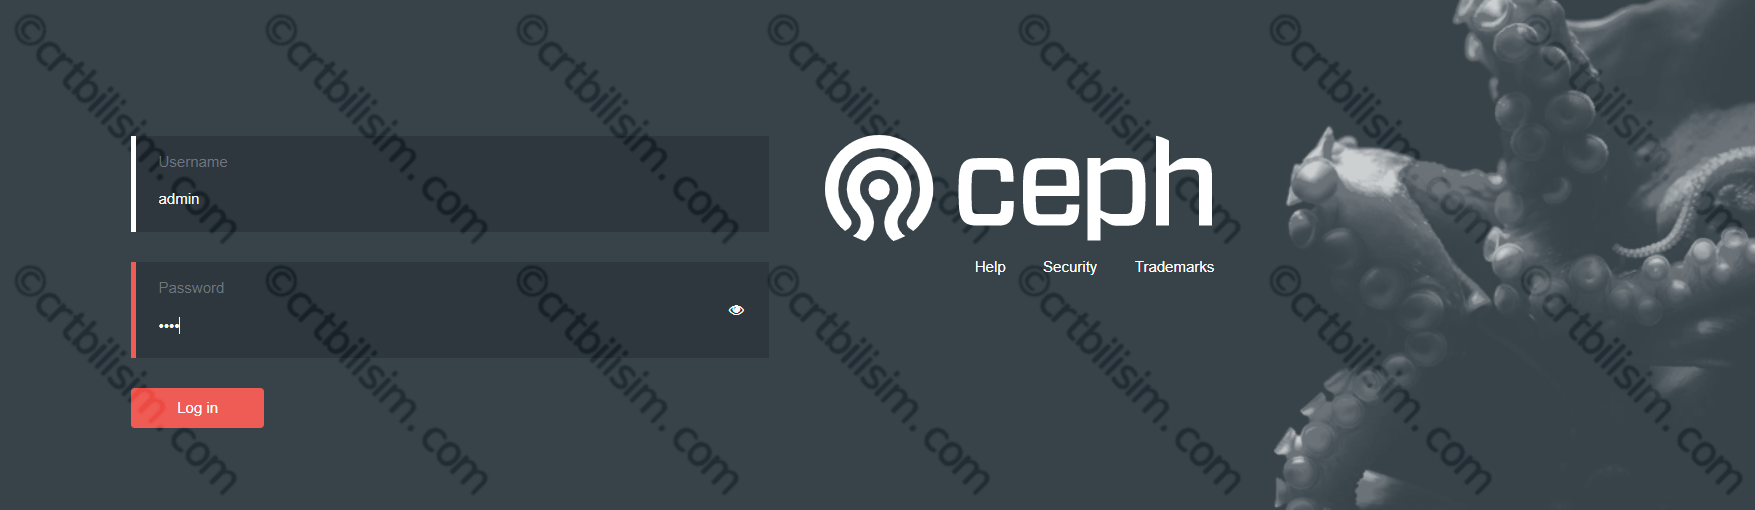 CEPH Dashboard